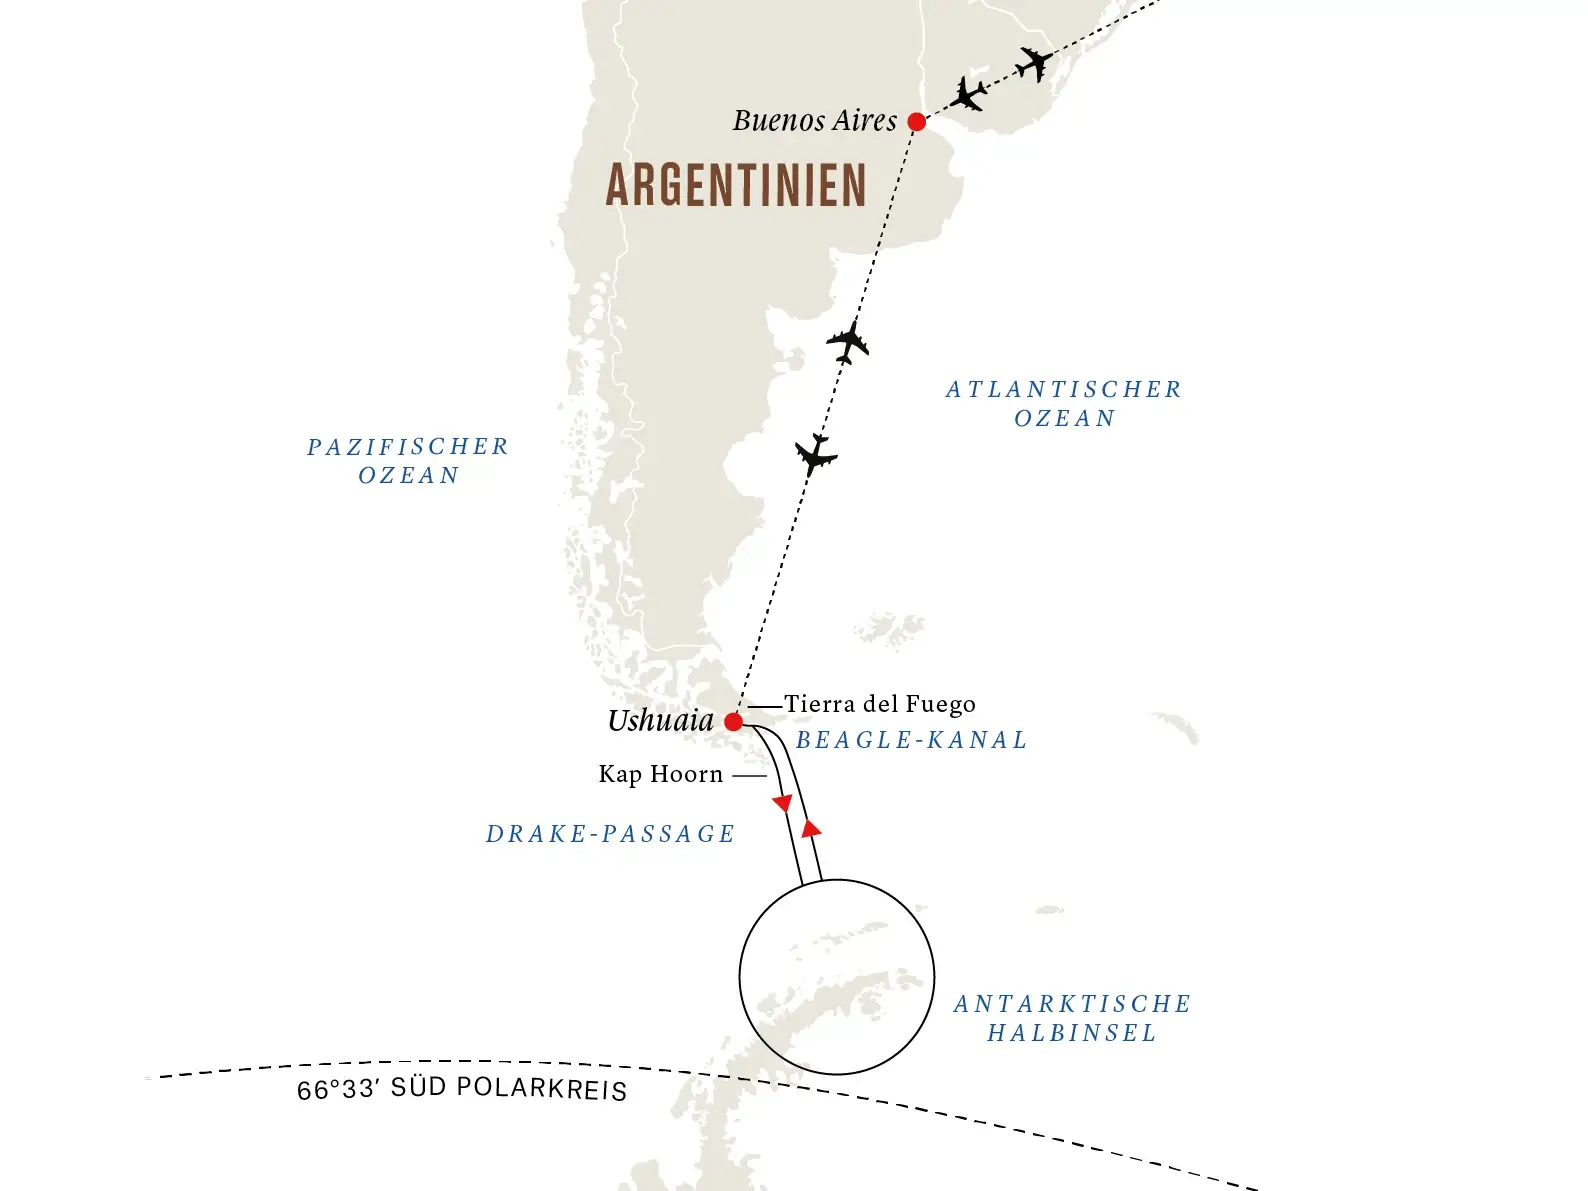 wagner-reisen-reisebuero-rosenheim-expeditionsreisen-buchen-hurtigruten-antarktis-entdecken-hurtigruten-expeditions-antarktis-route